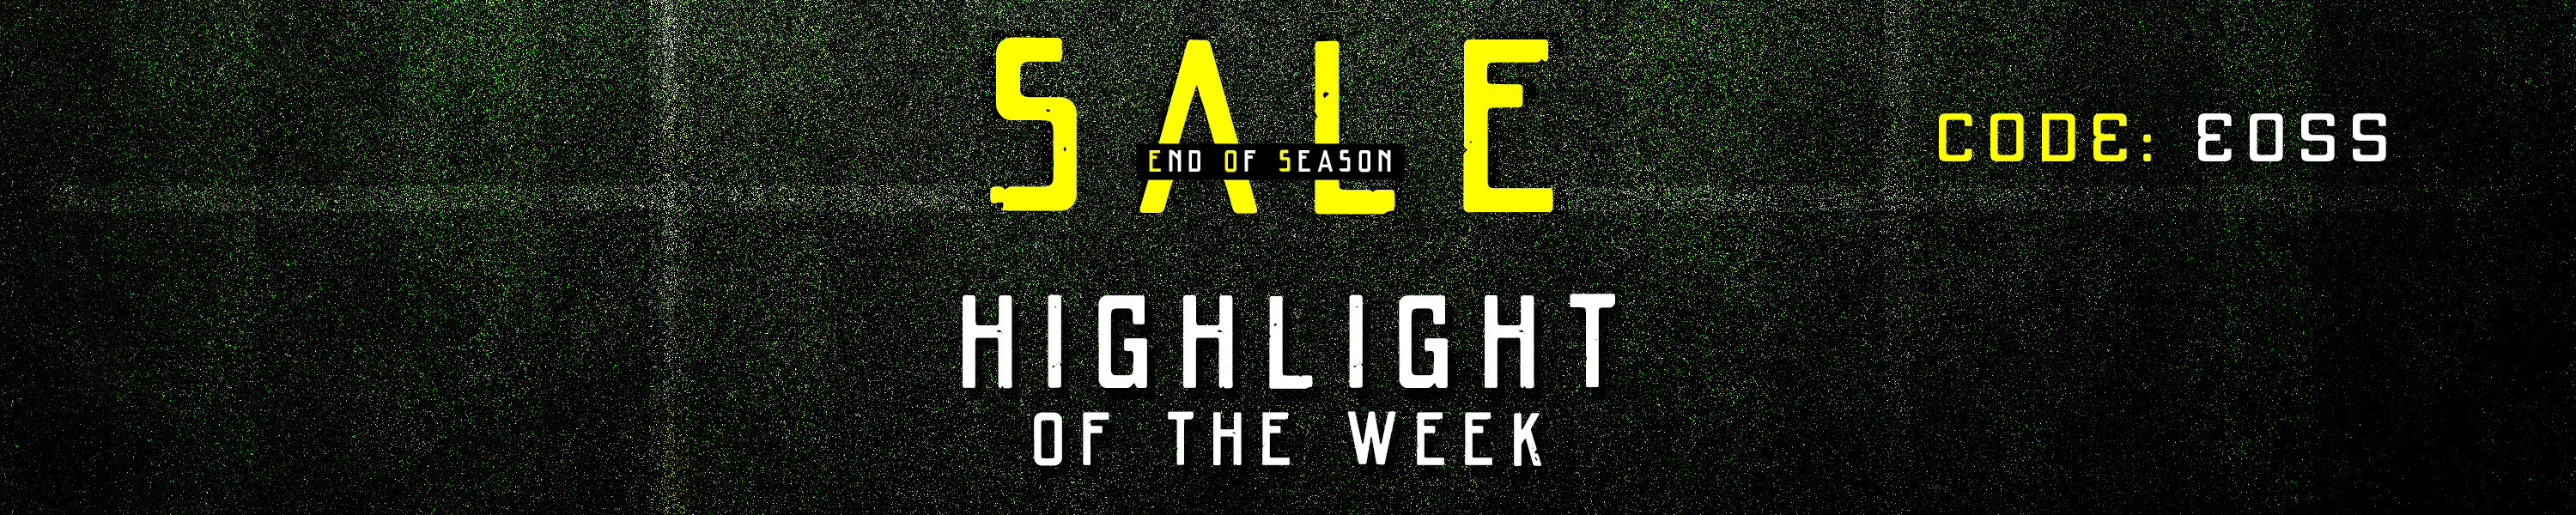 Highlight End of Season Sal e